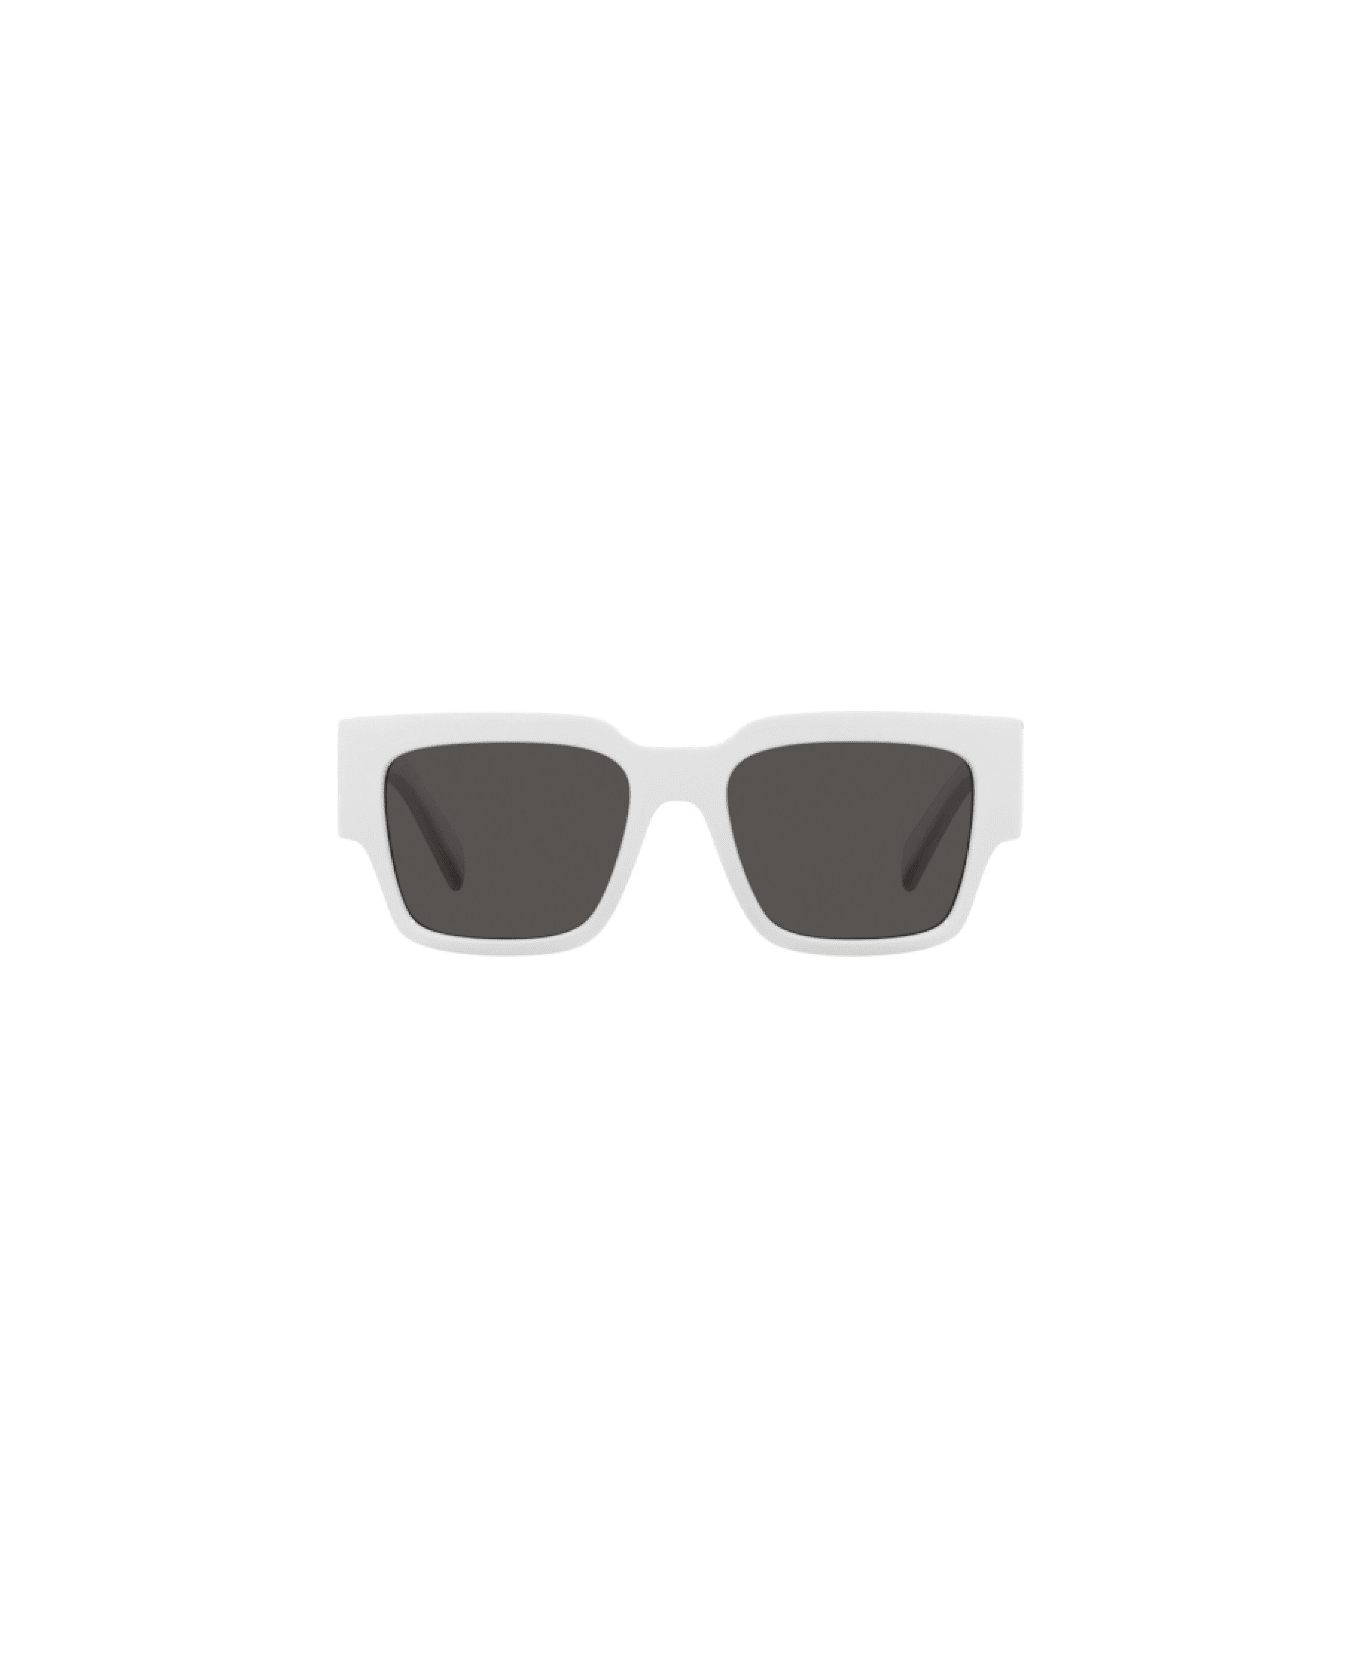 SNR 270v sunglasses Eyewear DG6184s Sunglasses - Nero